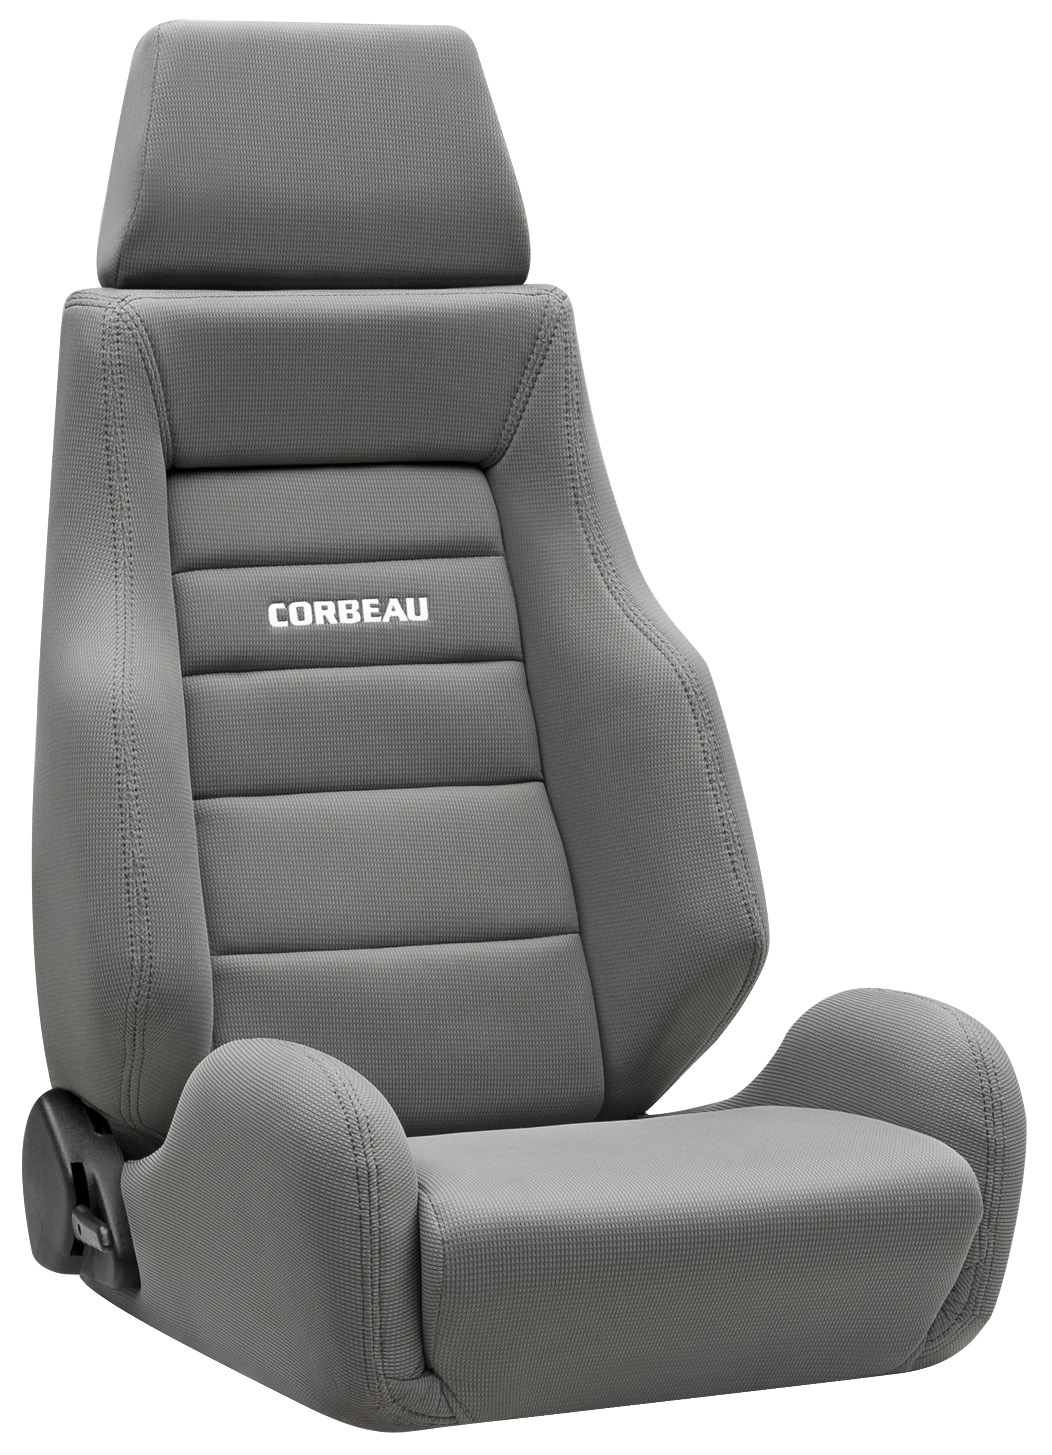 Corbeau GTSII Racing Seat, Grey Cloth, 20309PR